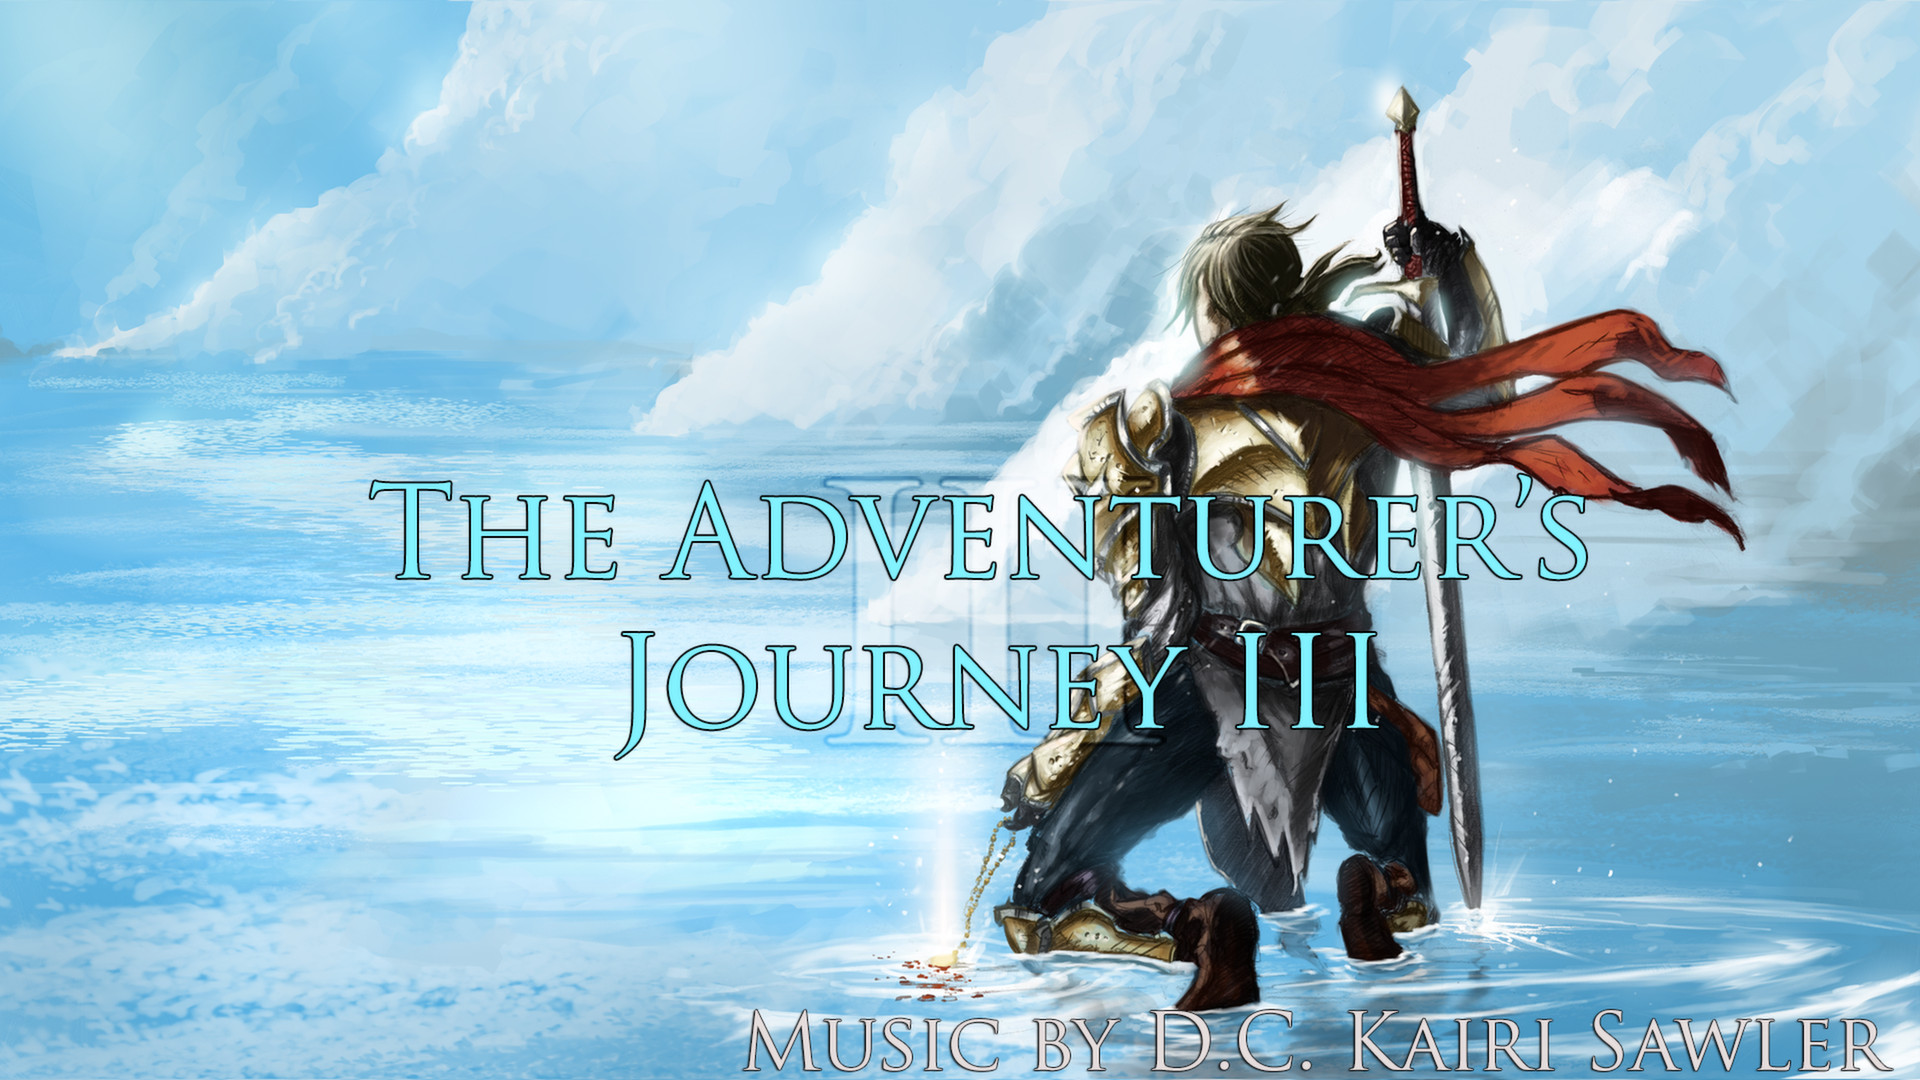 RPG Maker VX Ace - The Adventurer's Journey III DLC Steam CD Key $4.51